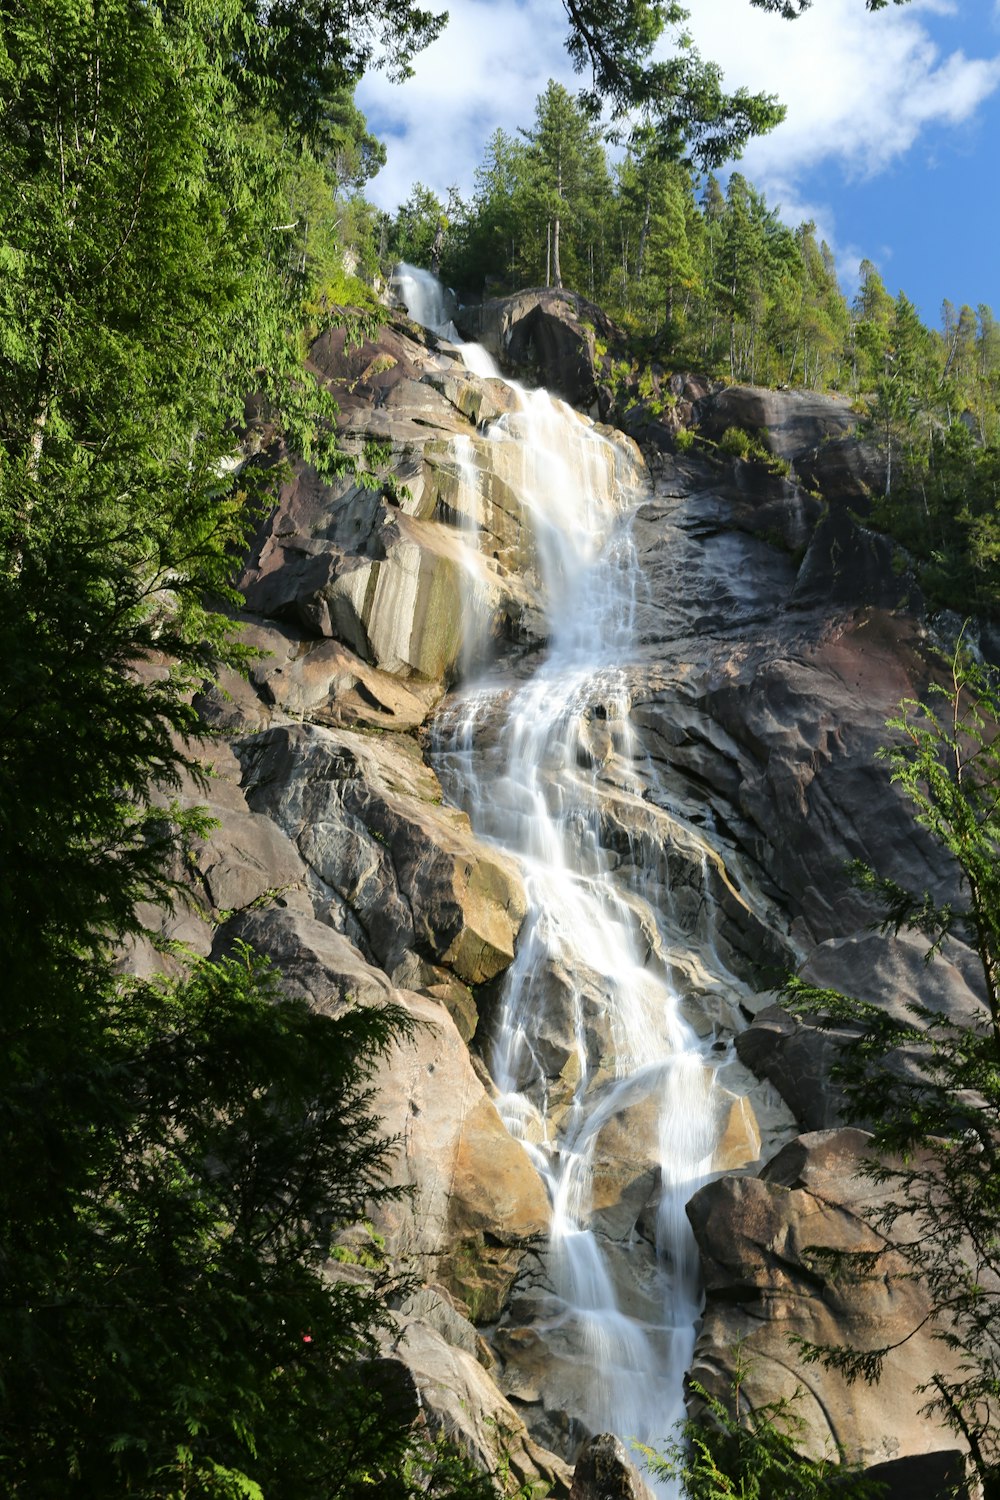 waterfalls